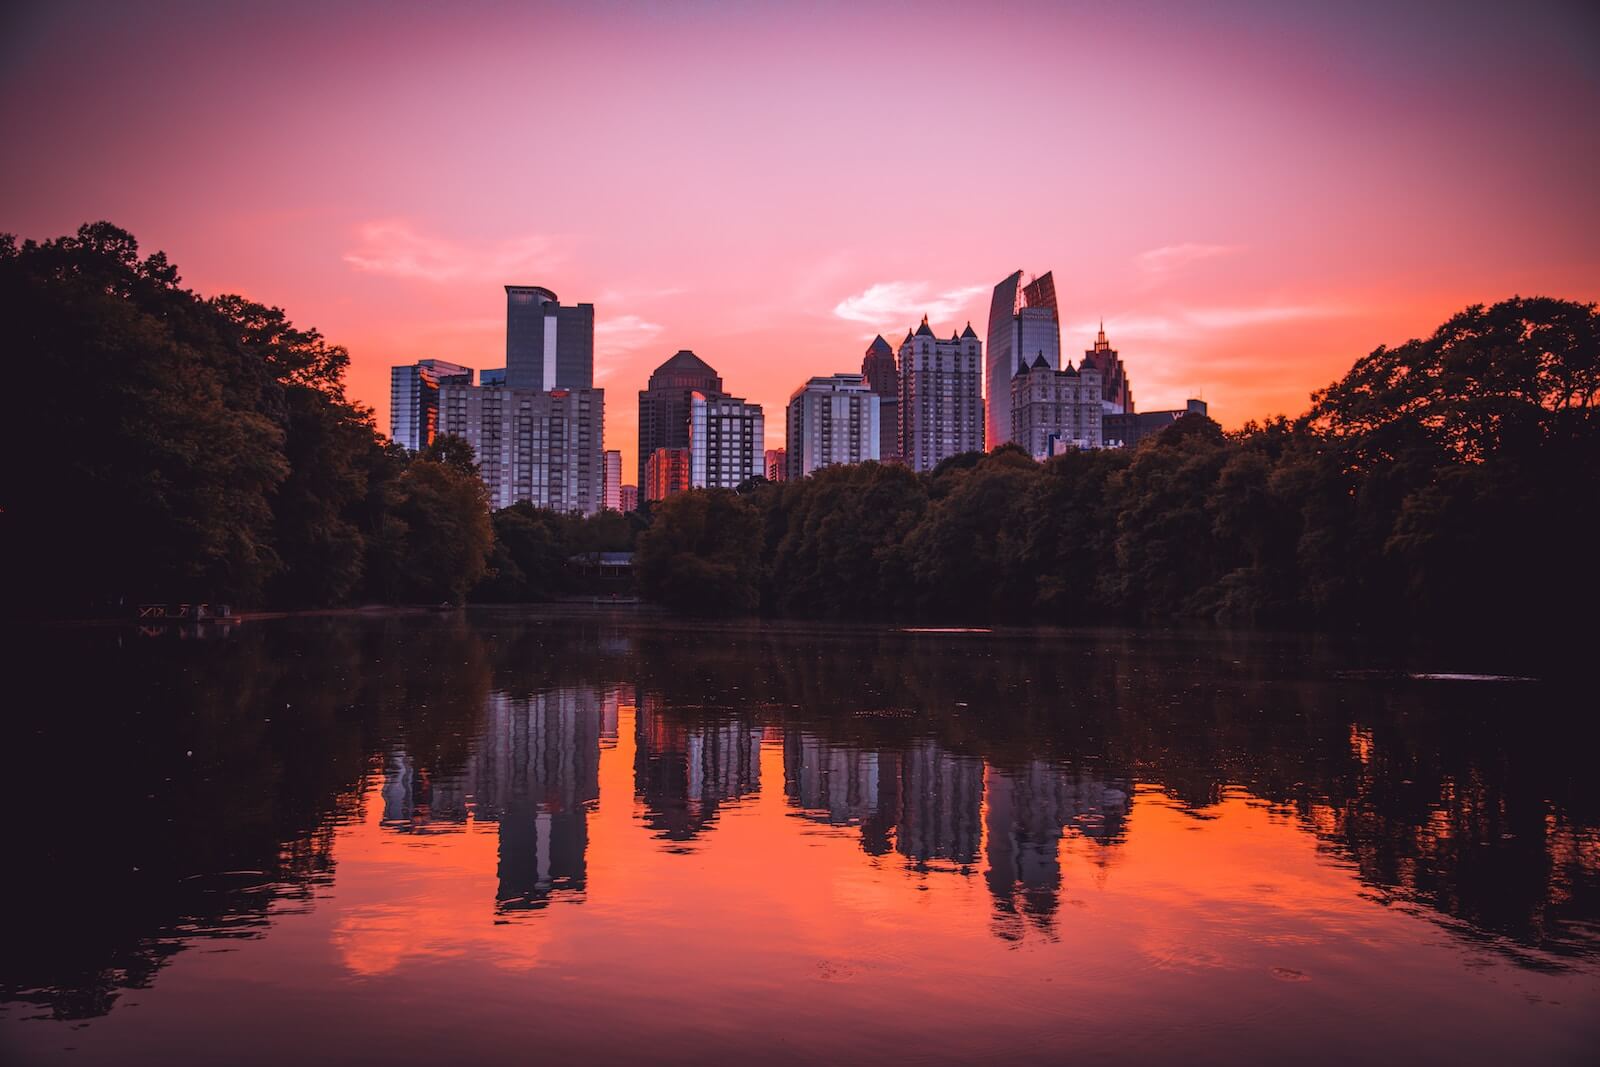 A sunset in Atlanta, Georgia